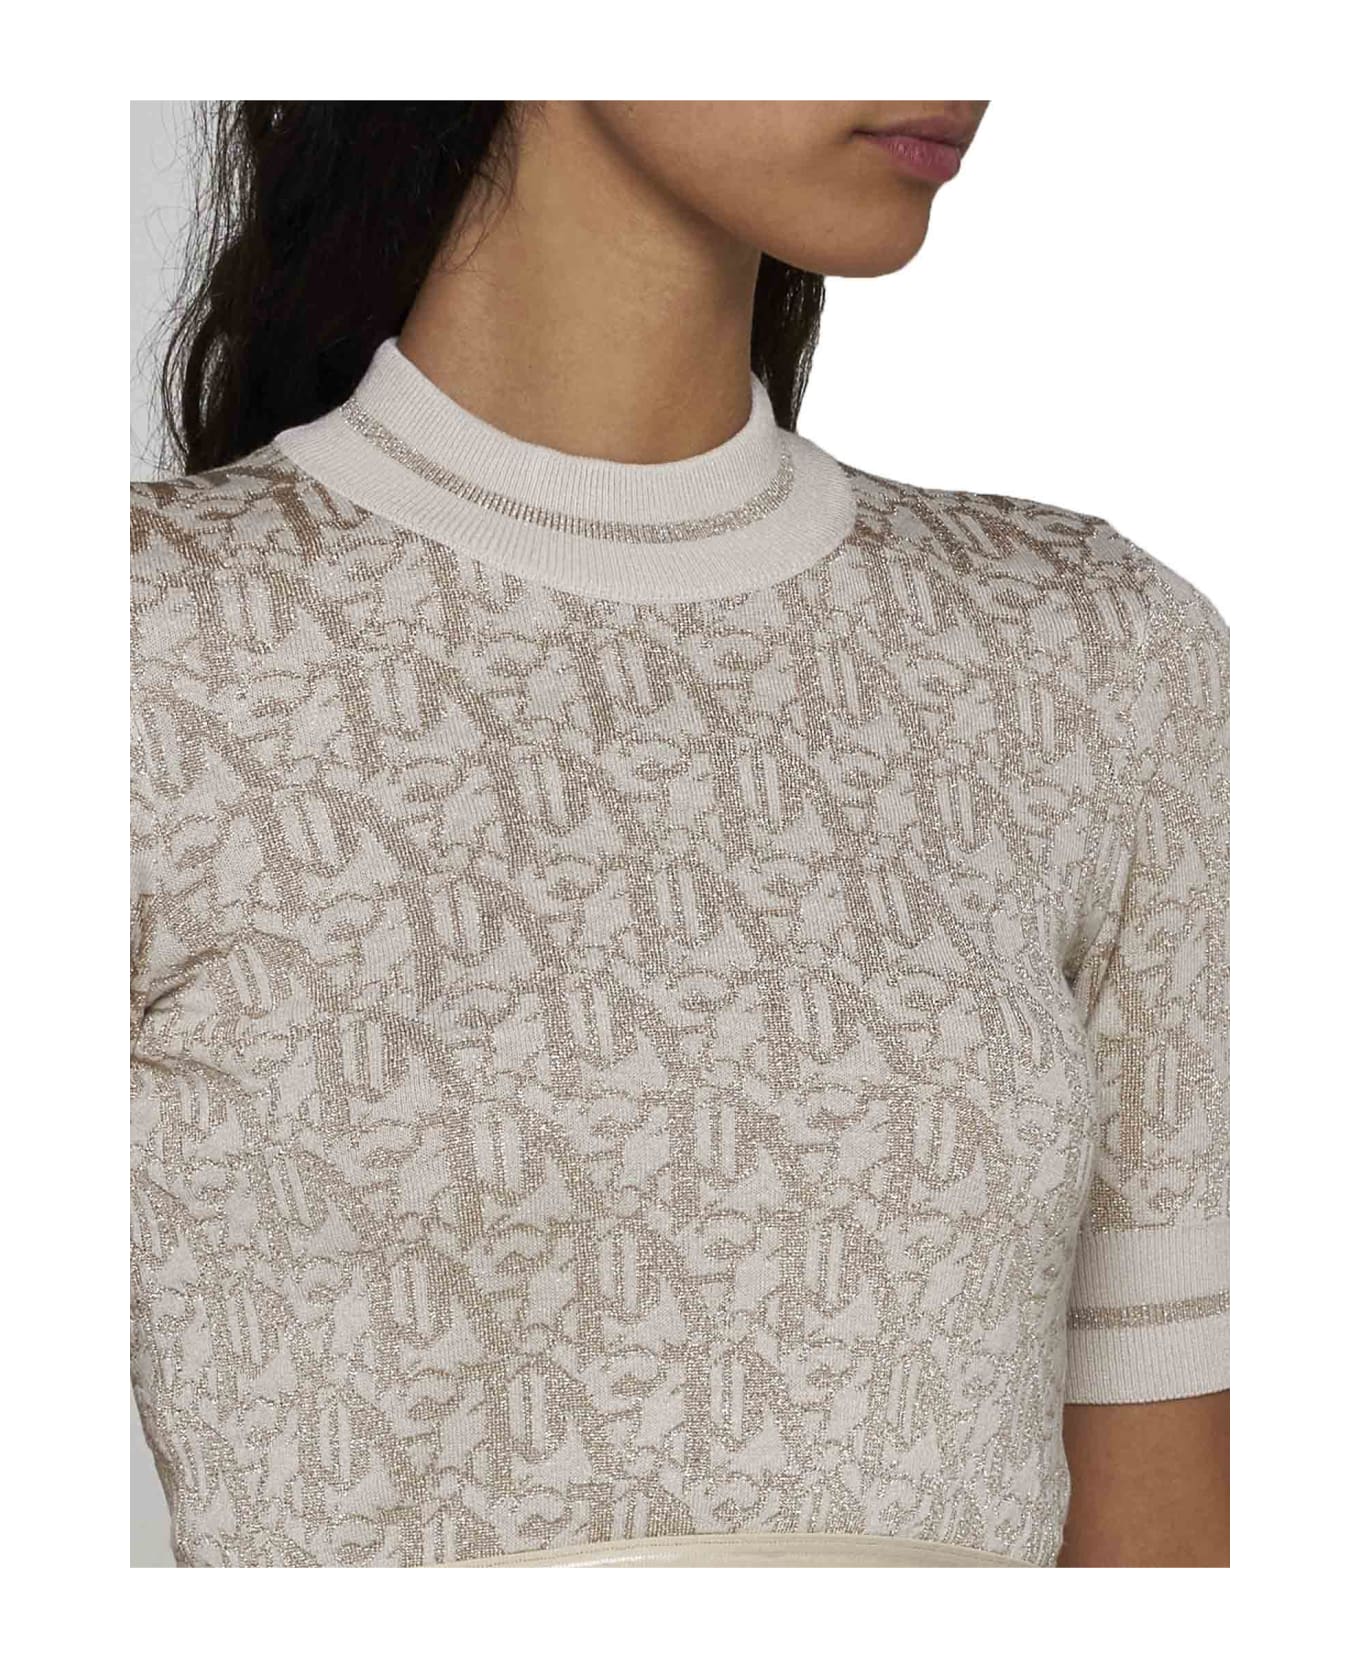 Palm Angels Monogram Cropped Top In Lurex Knit - Off white beige